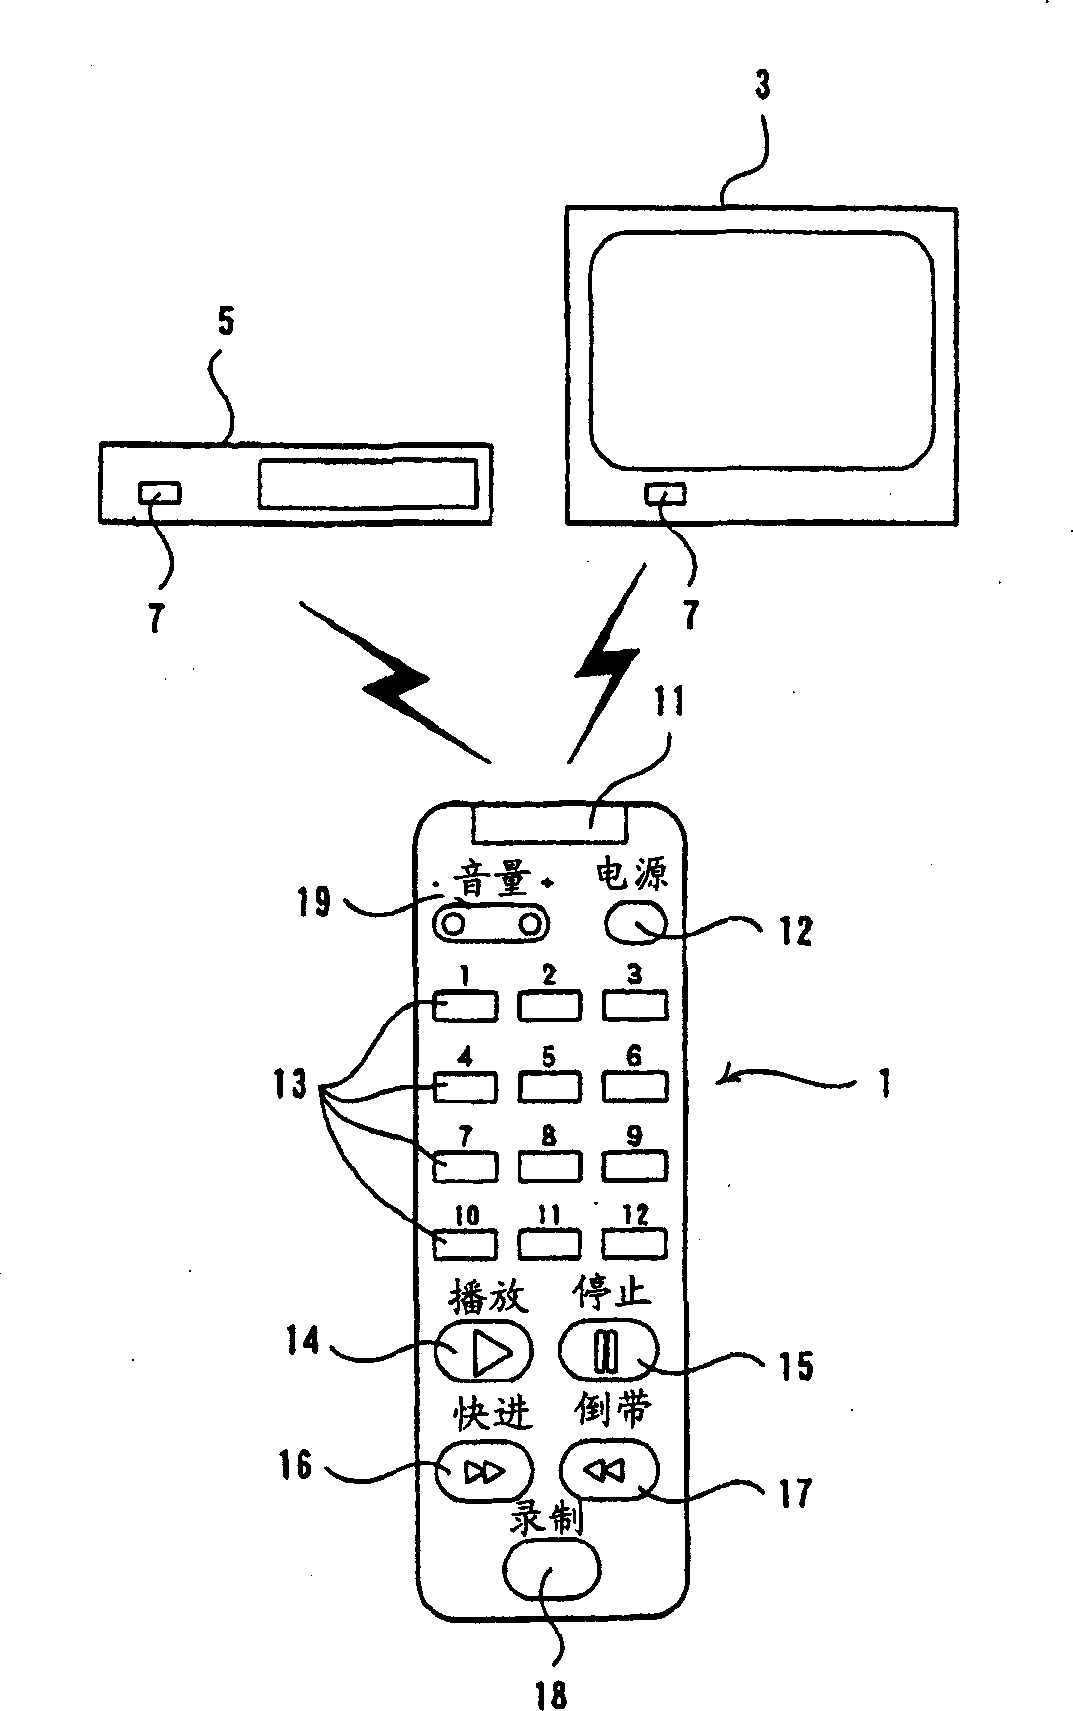 Remote control device with pressure-sensitive keys